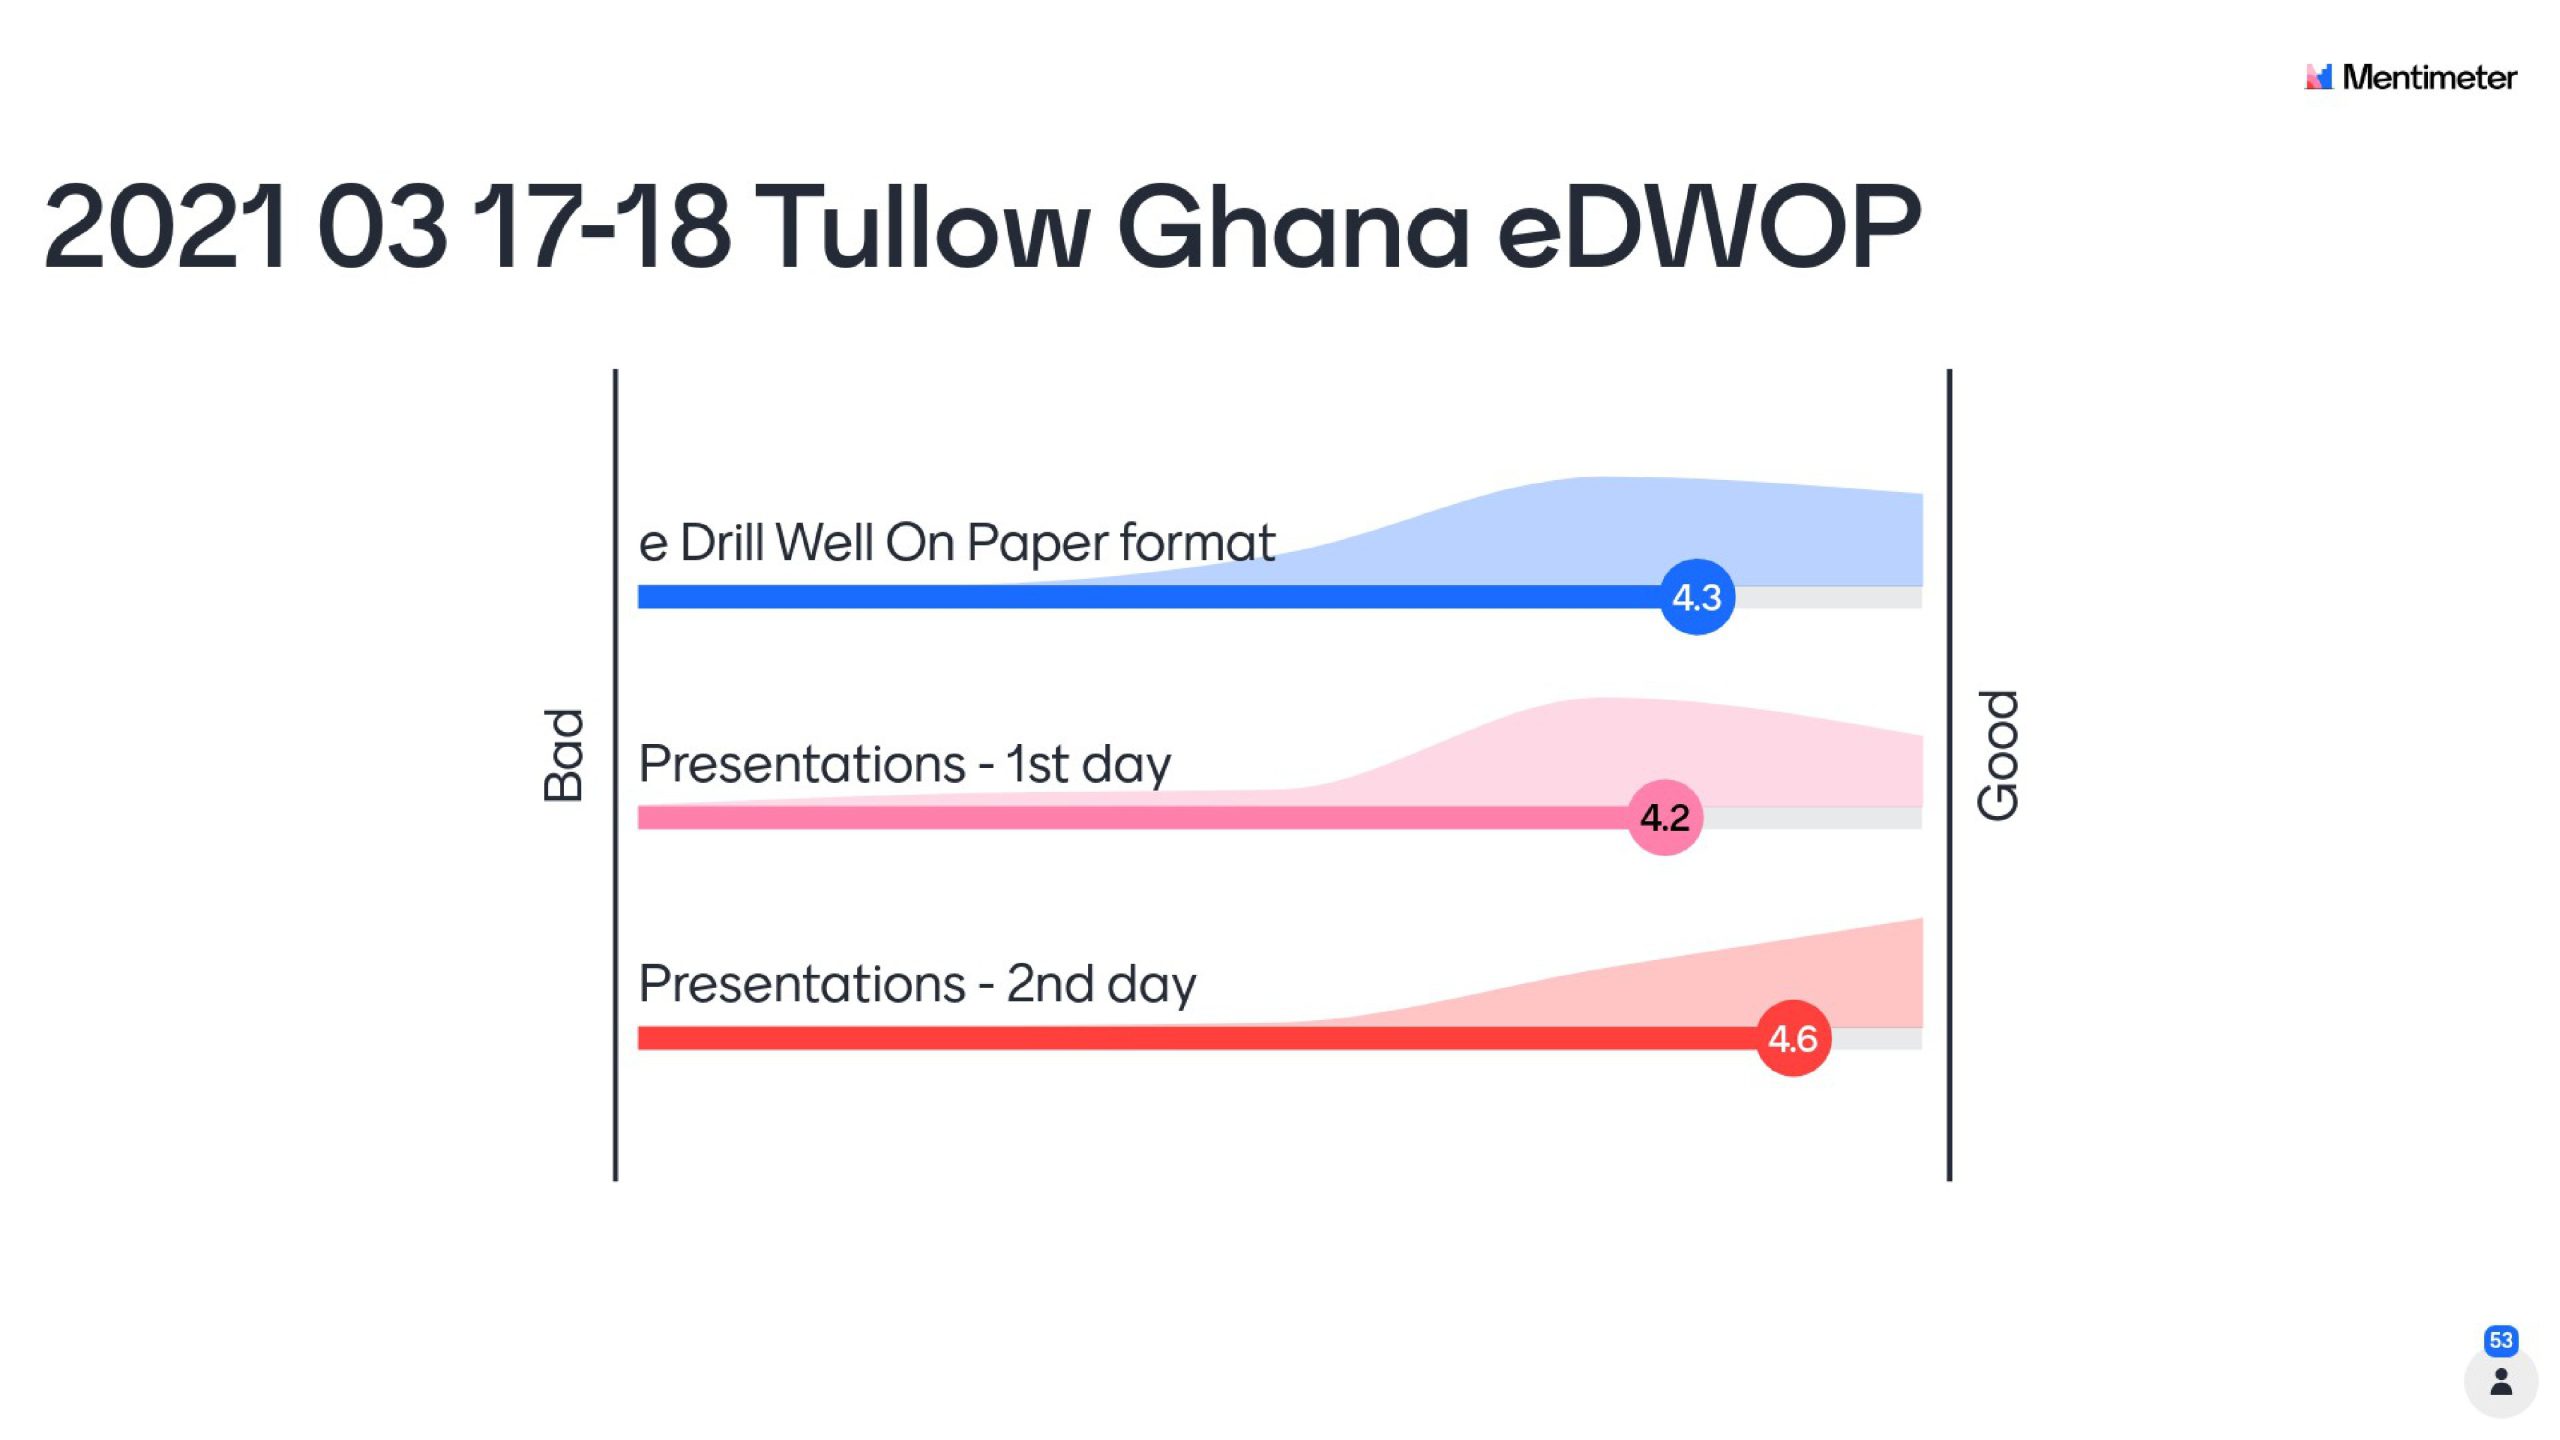 2021 03 17-18 Tullow Ghana eDWOP